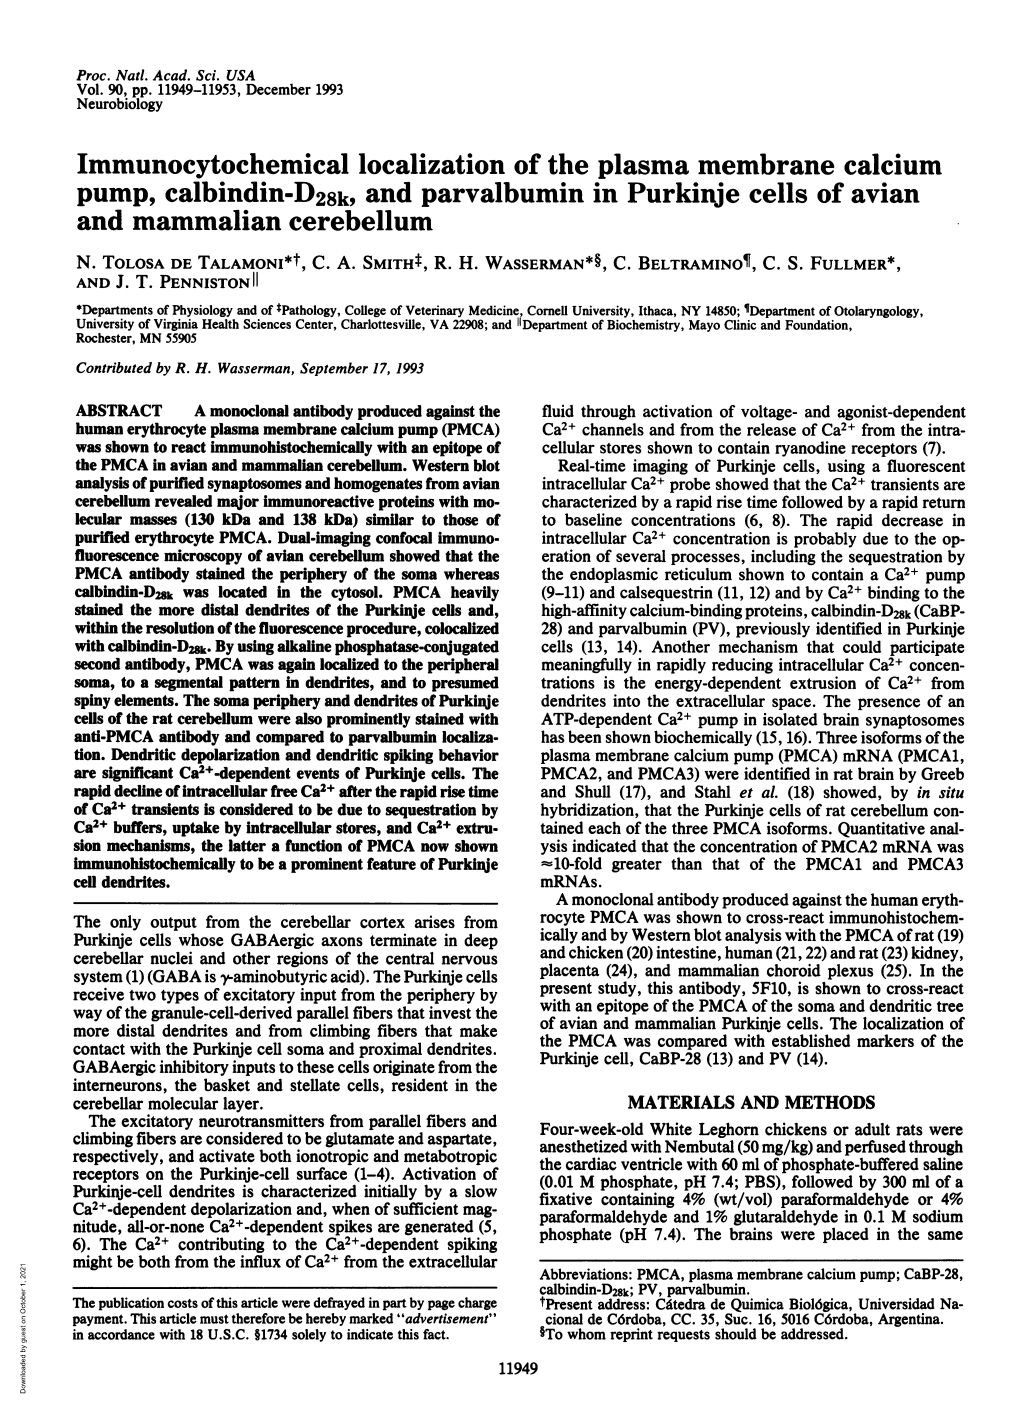 Immunocytochemical Localization of the Plasma Membrane Calcium Pump, Calbindin-D28k, and Parvalbumin in Purkinje Cells of Avian and Mammalian Cerebellum N